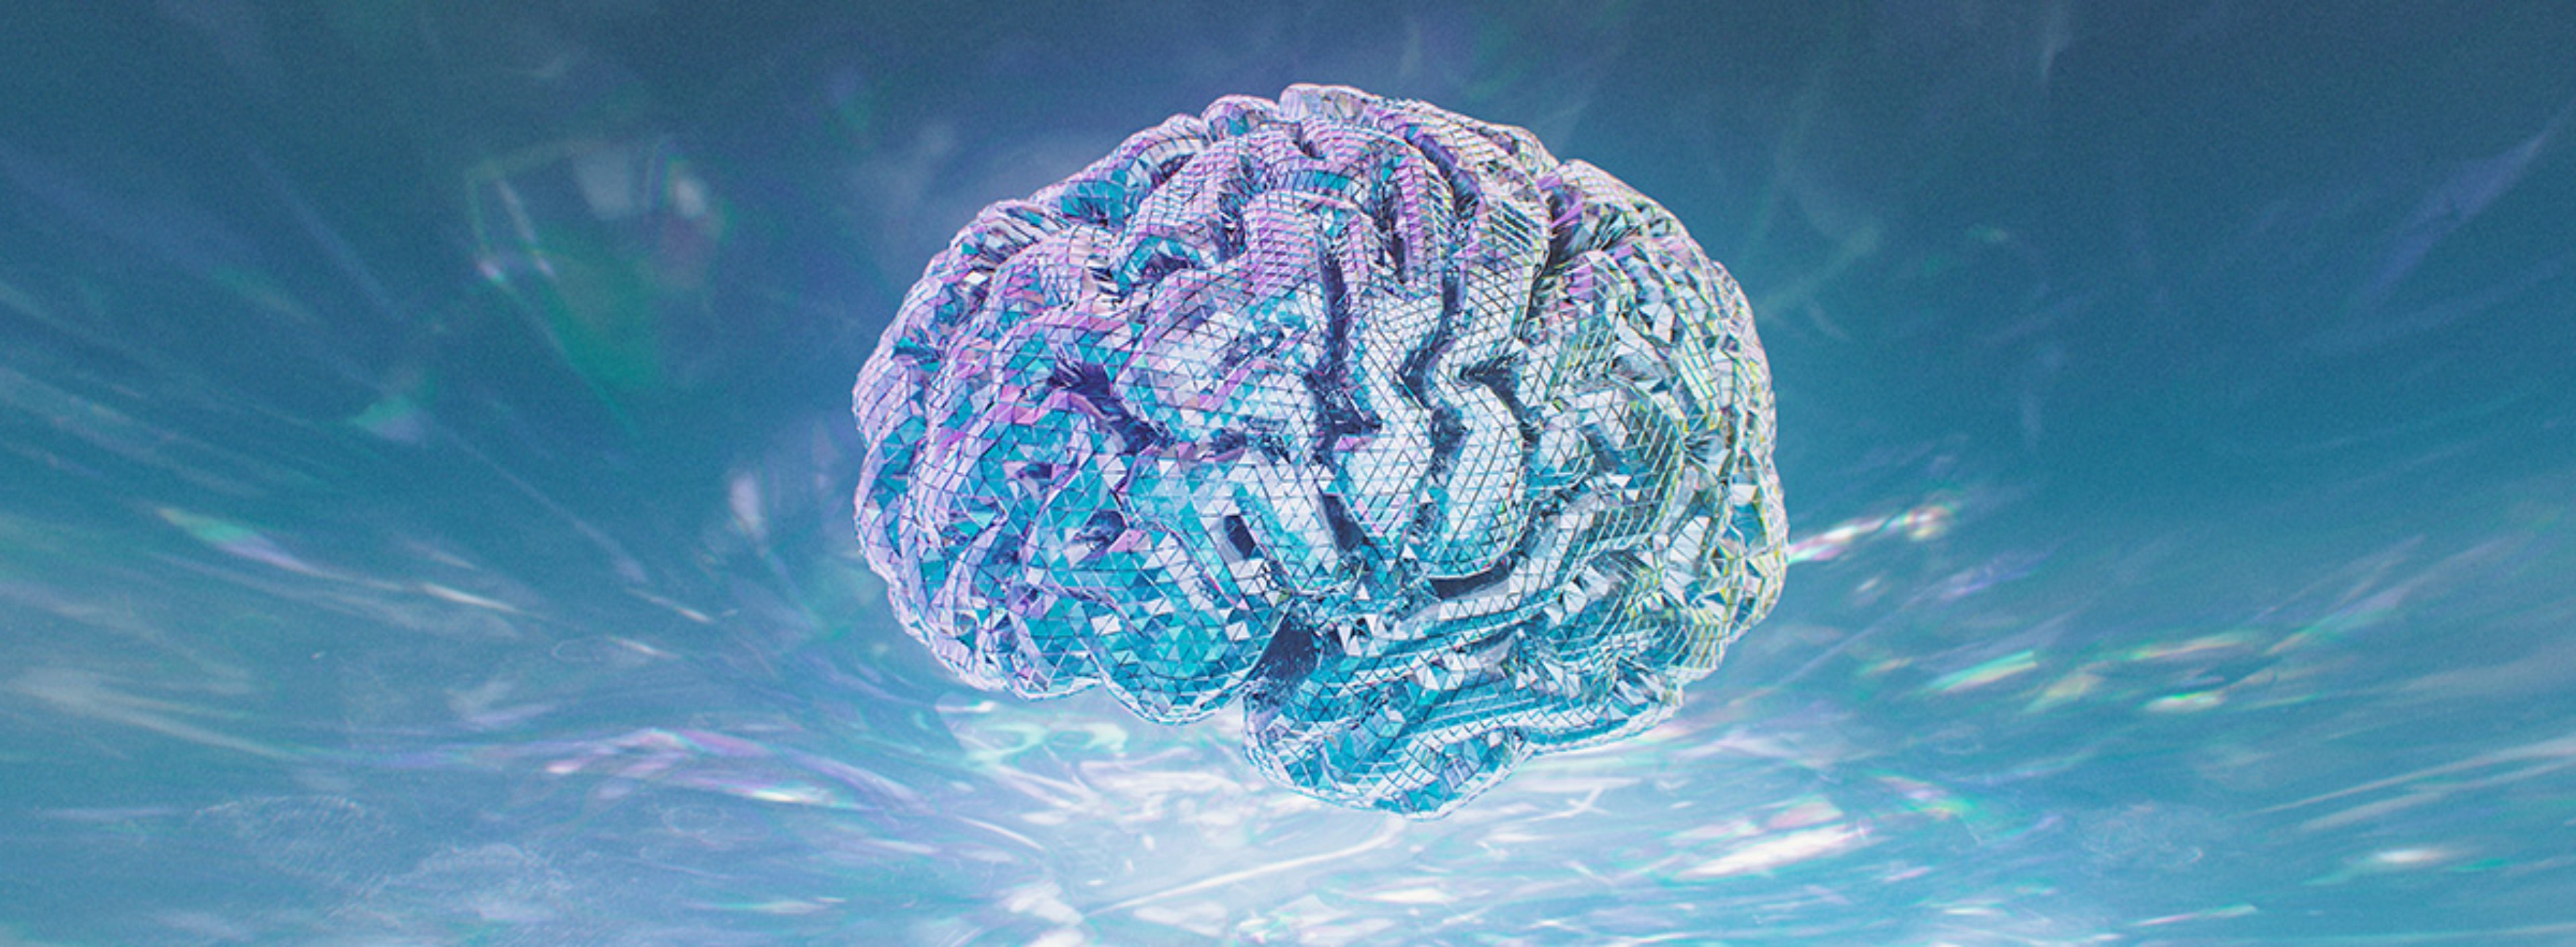 futuristic image of human brain